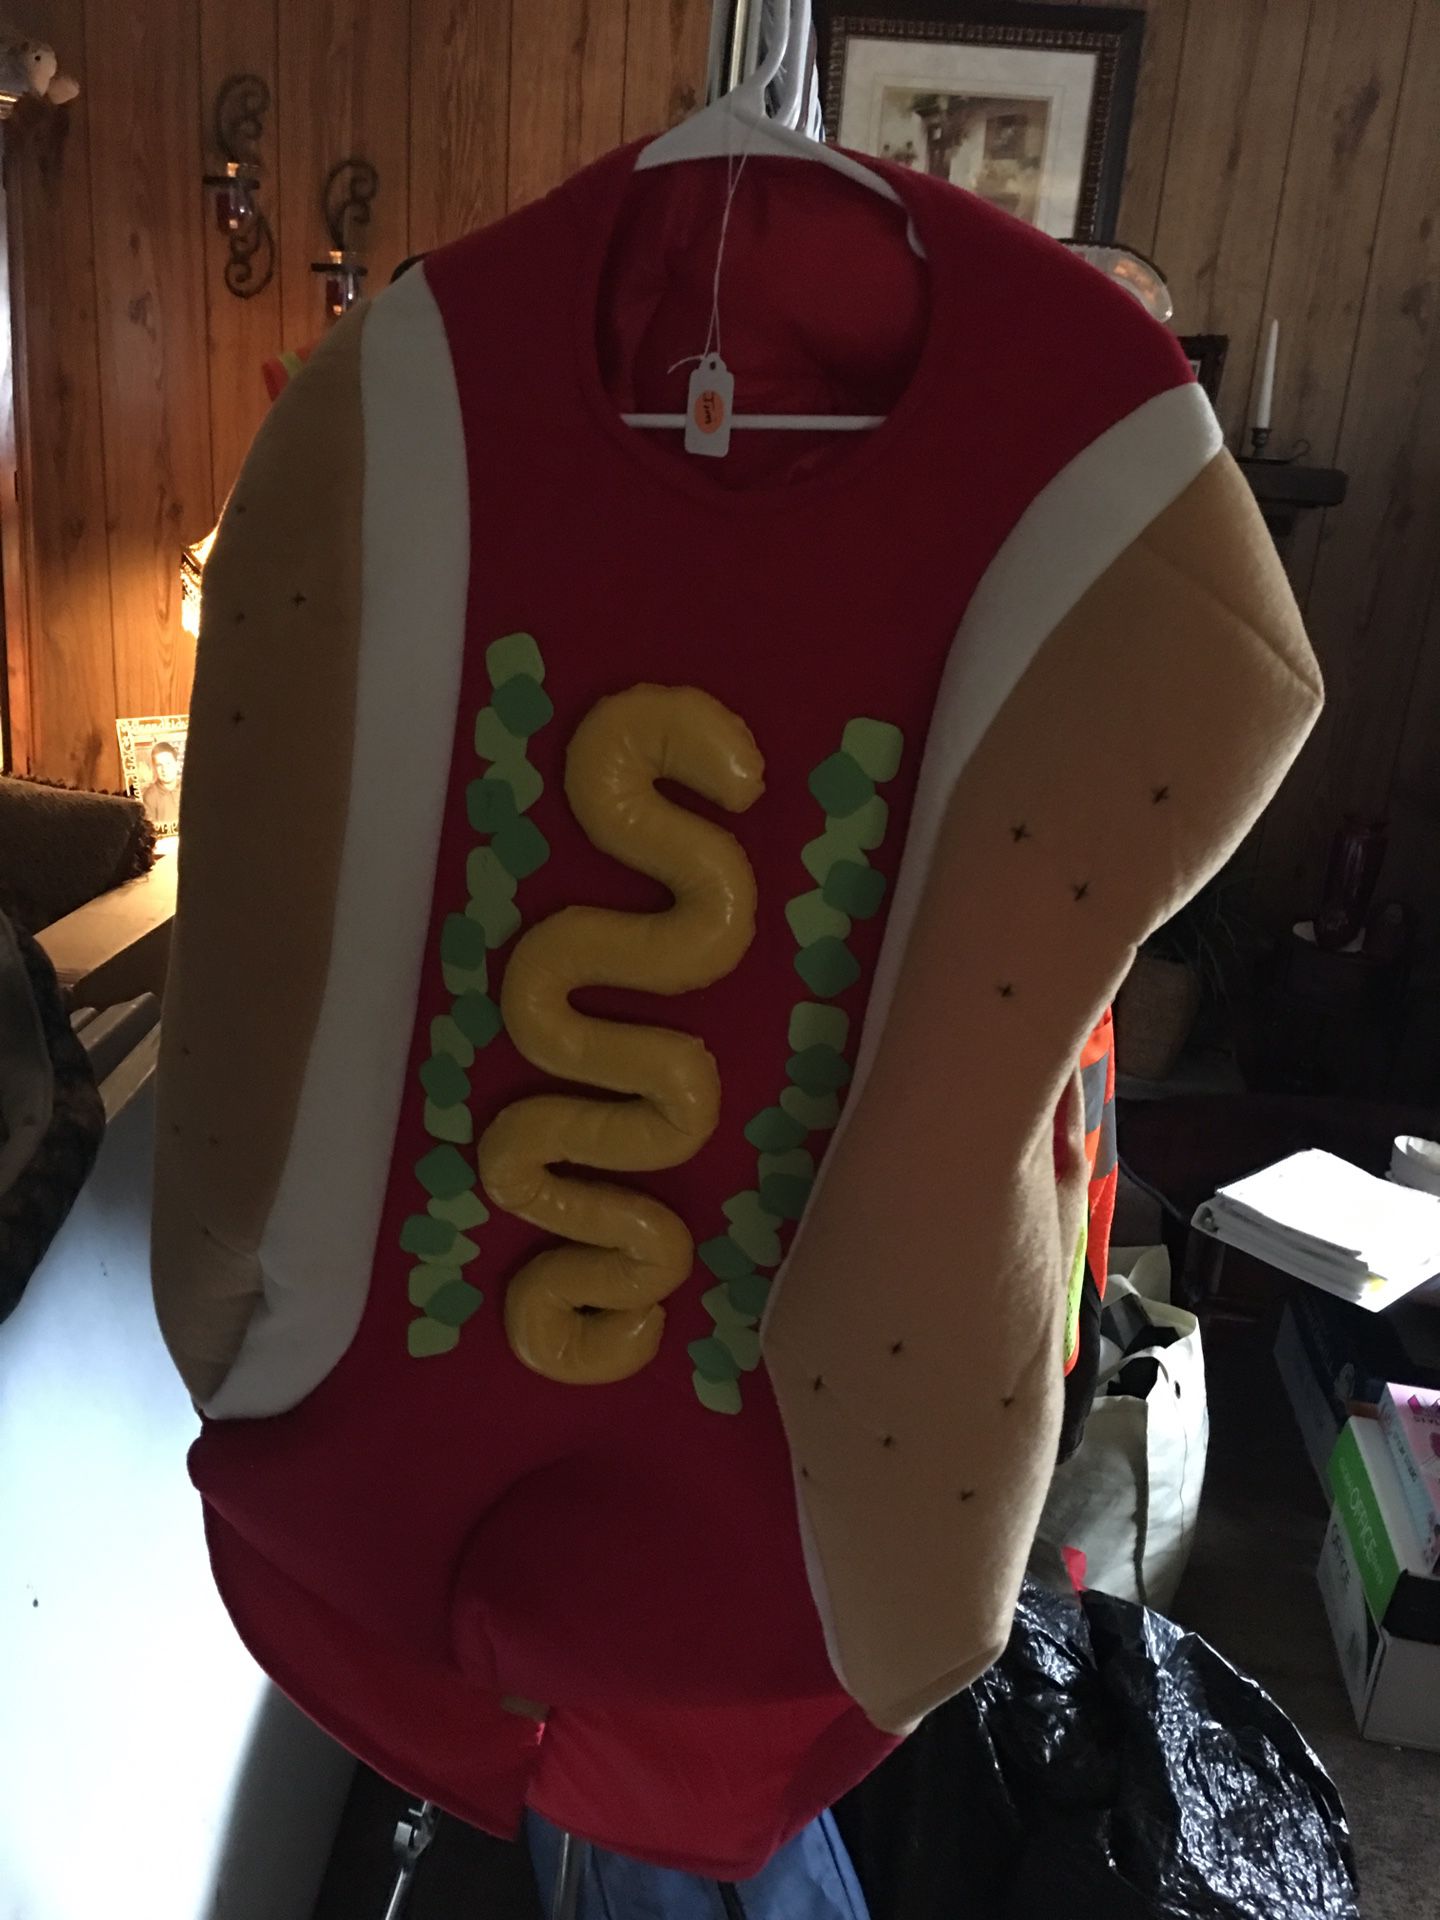 Hot dog with bun Halloween costume.